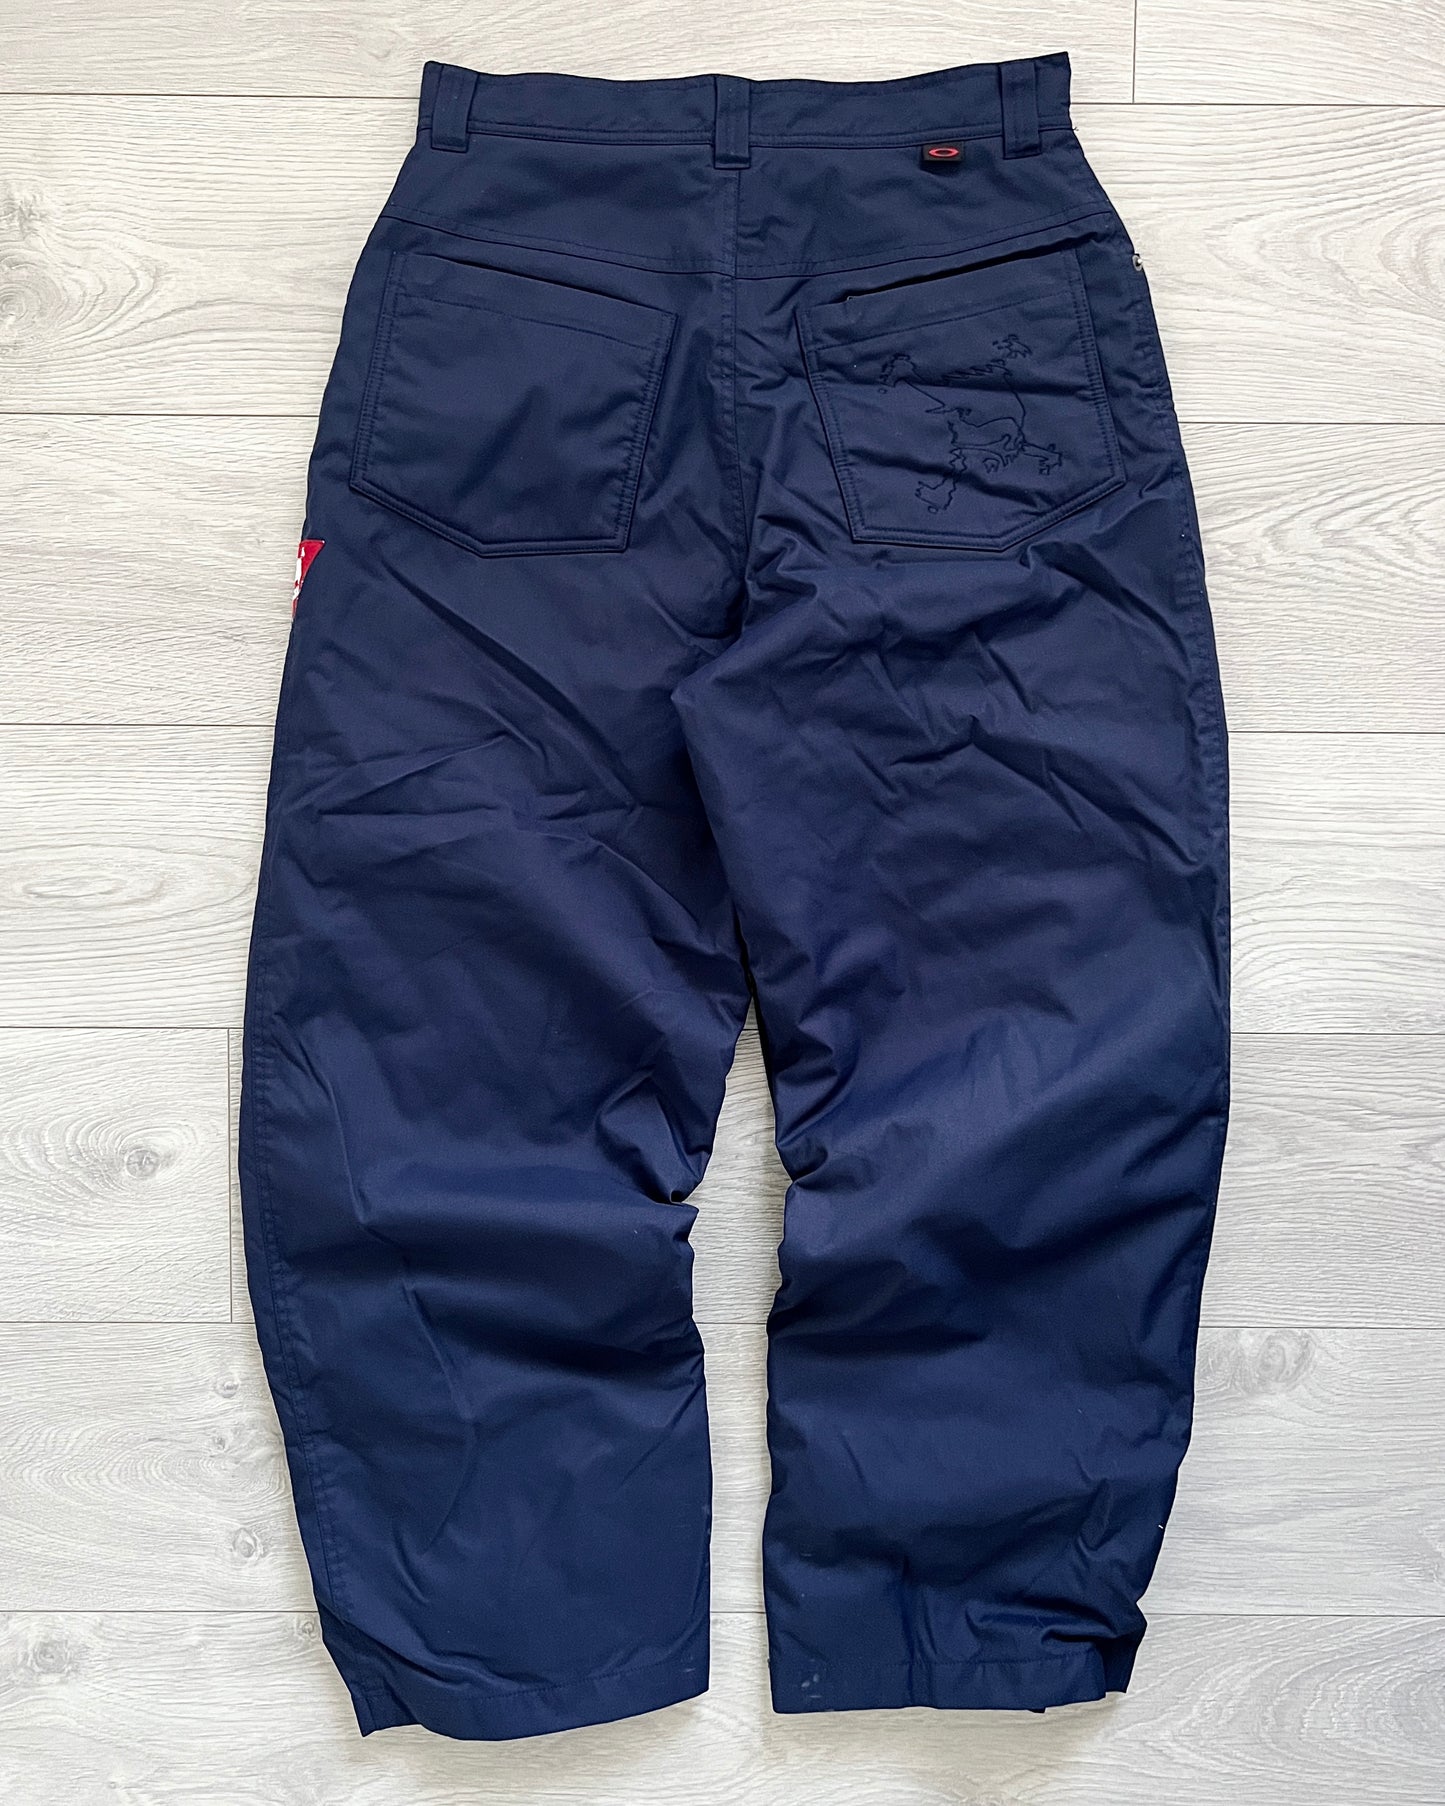 Oakley 00s Technical Vent Fleece Lined Pants - Size 30